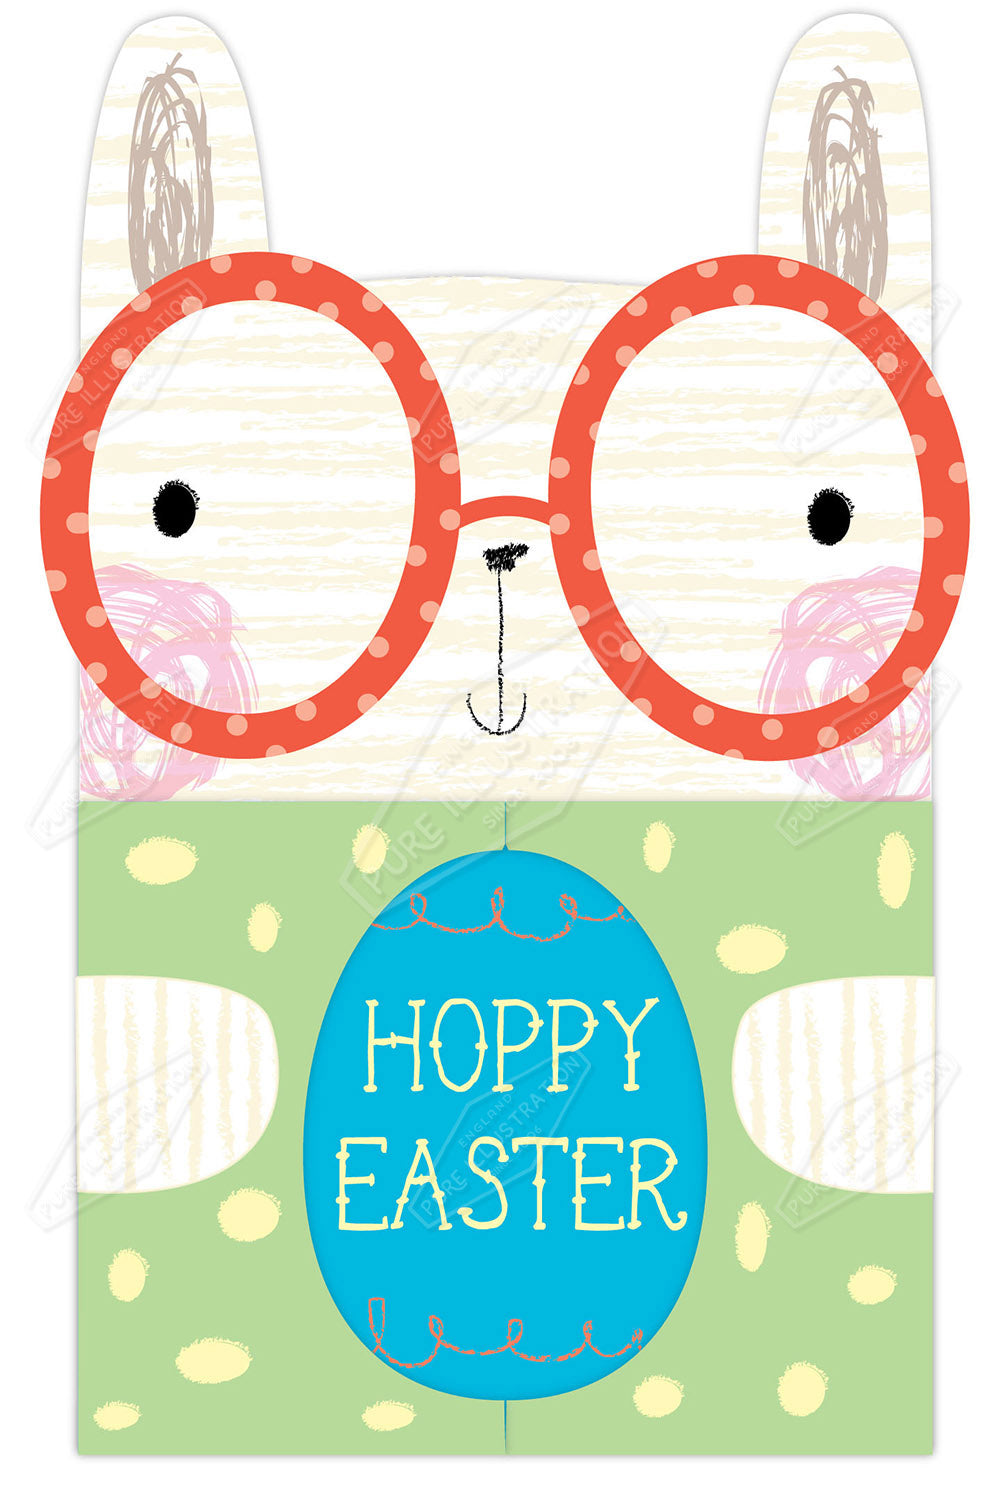 00032082AMC - Amanda McDonough is represented by Pure Art Licensing Agency - Easter Greeting Card Design